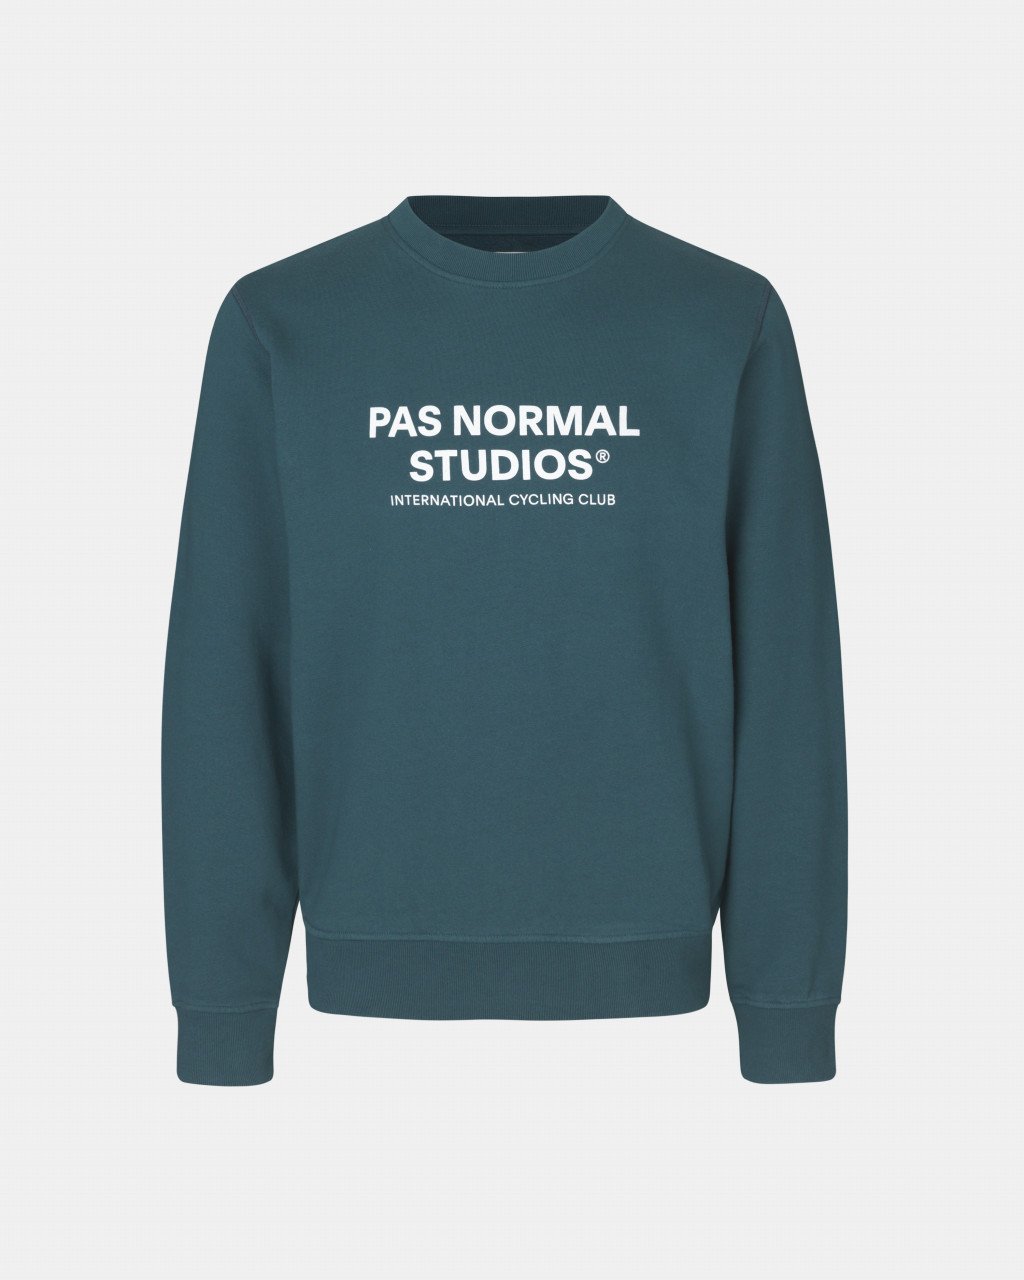 PNS Off-Race Logo Sweatshirt - Teal - Pas Normal Studios